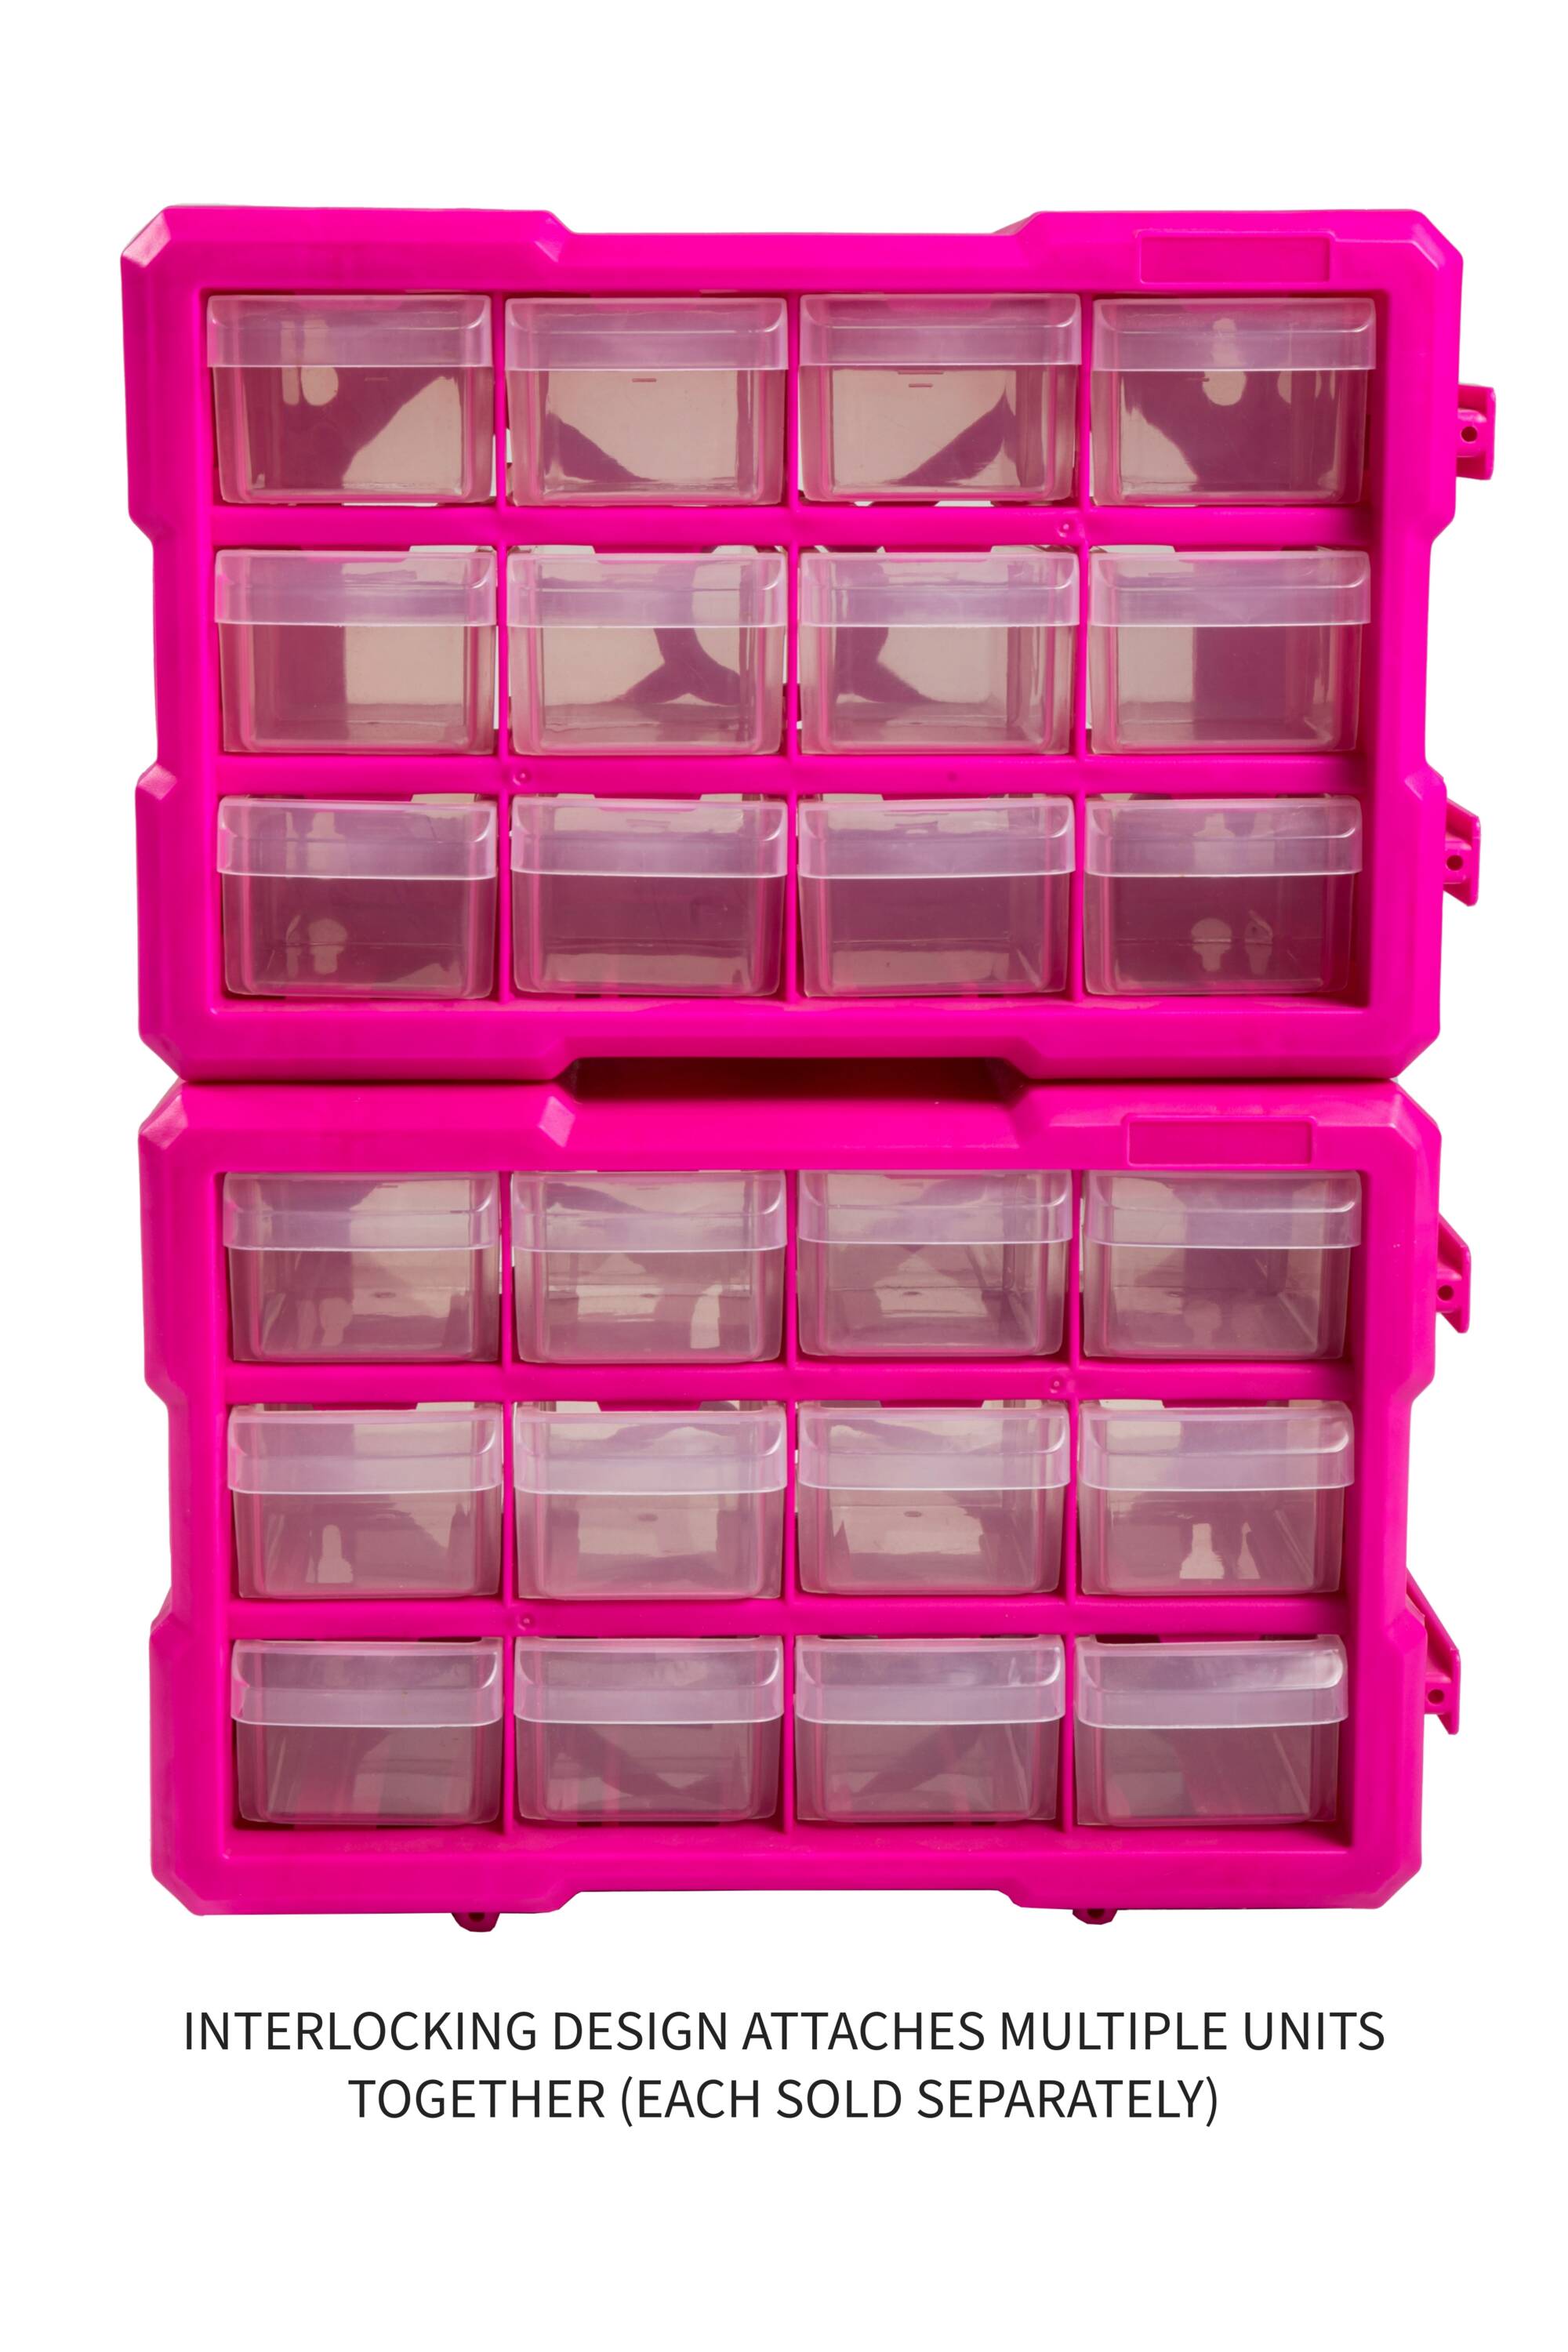 The Original Pink Box Pb12pbs 12-Drawer Small Parts Organizer, Pink